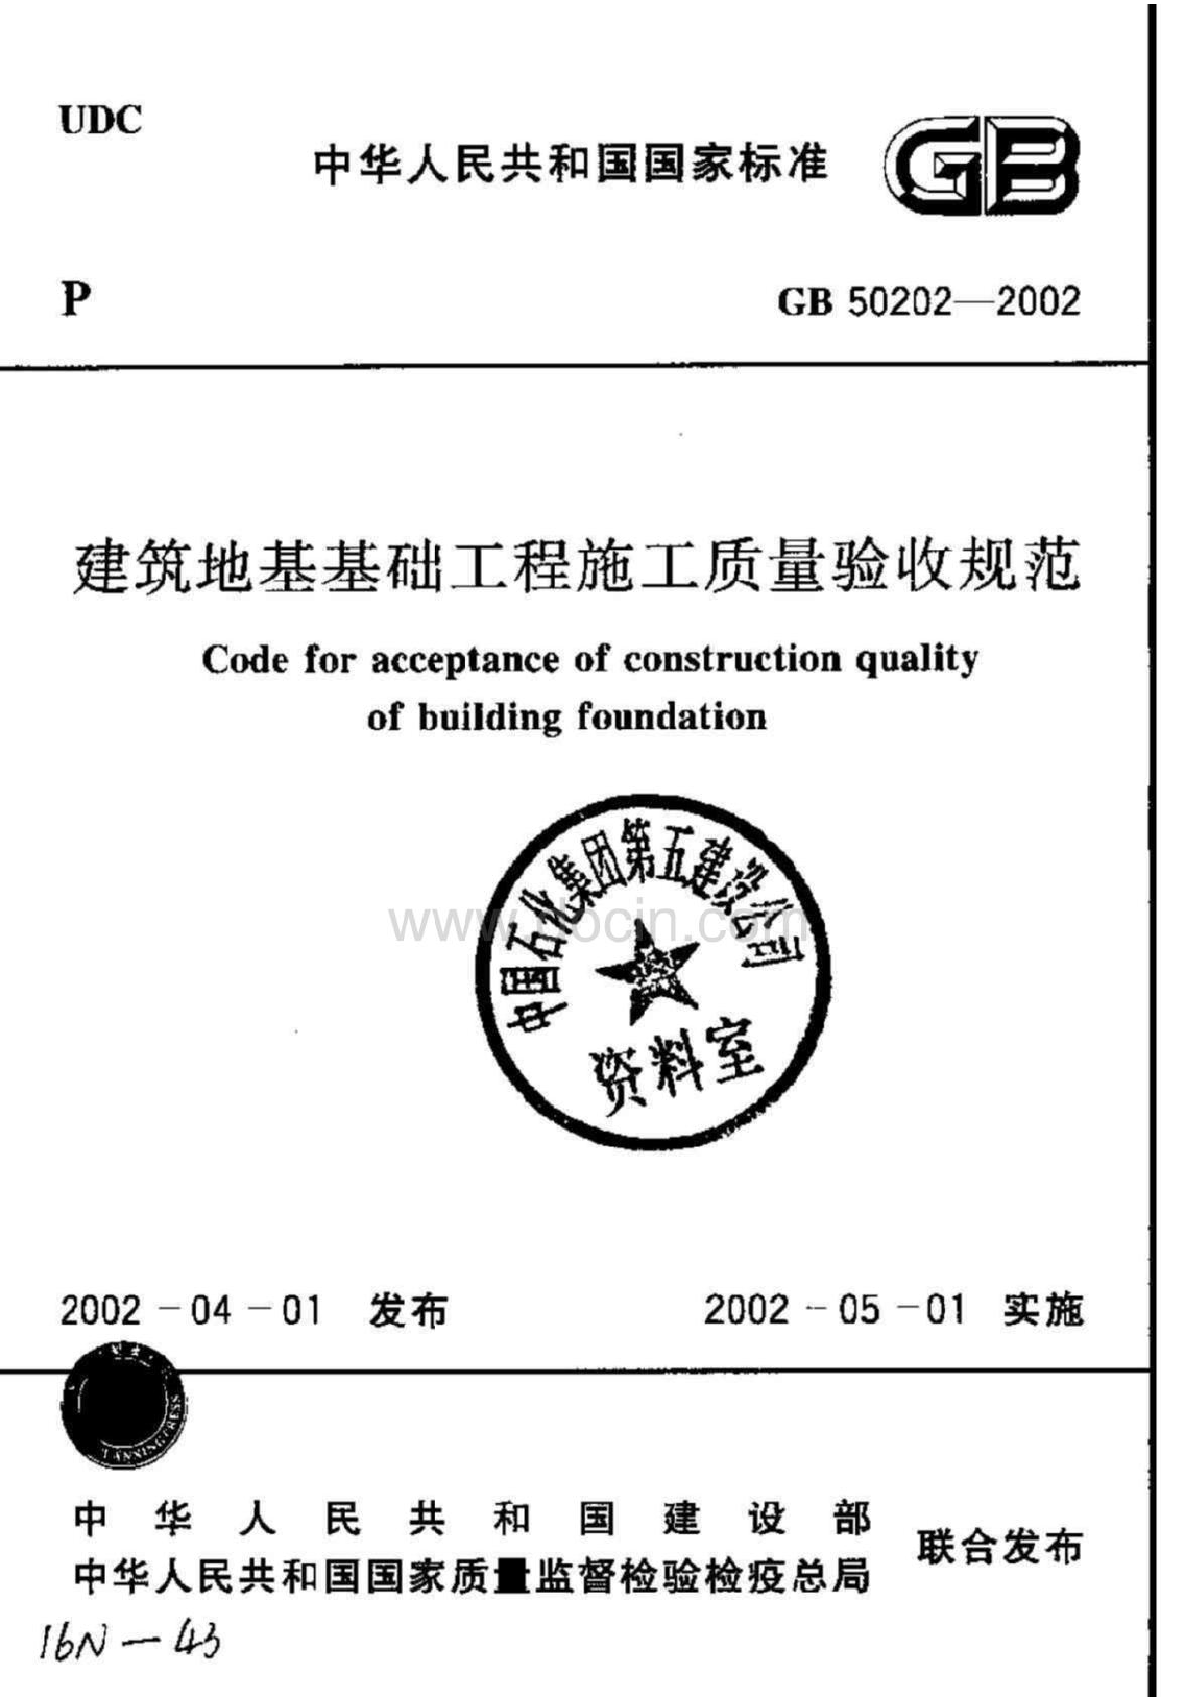 【GB 50202-2002】《建筑地基基础工程施工质量验收规范》含说明